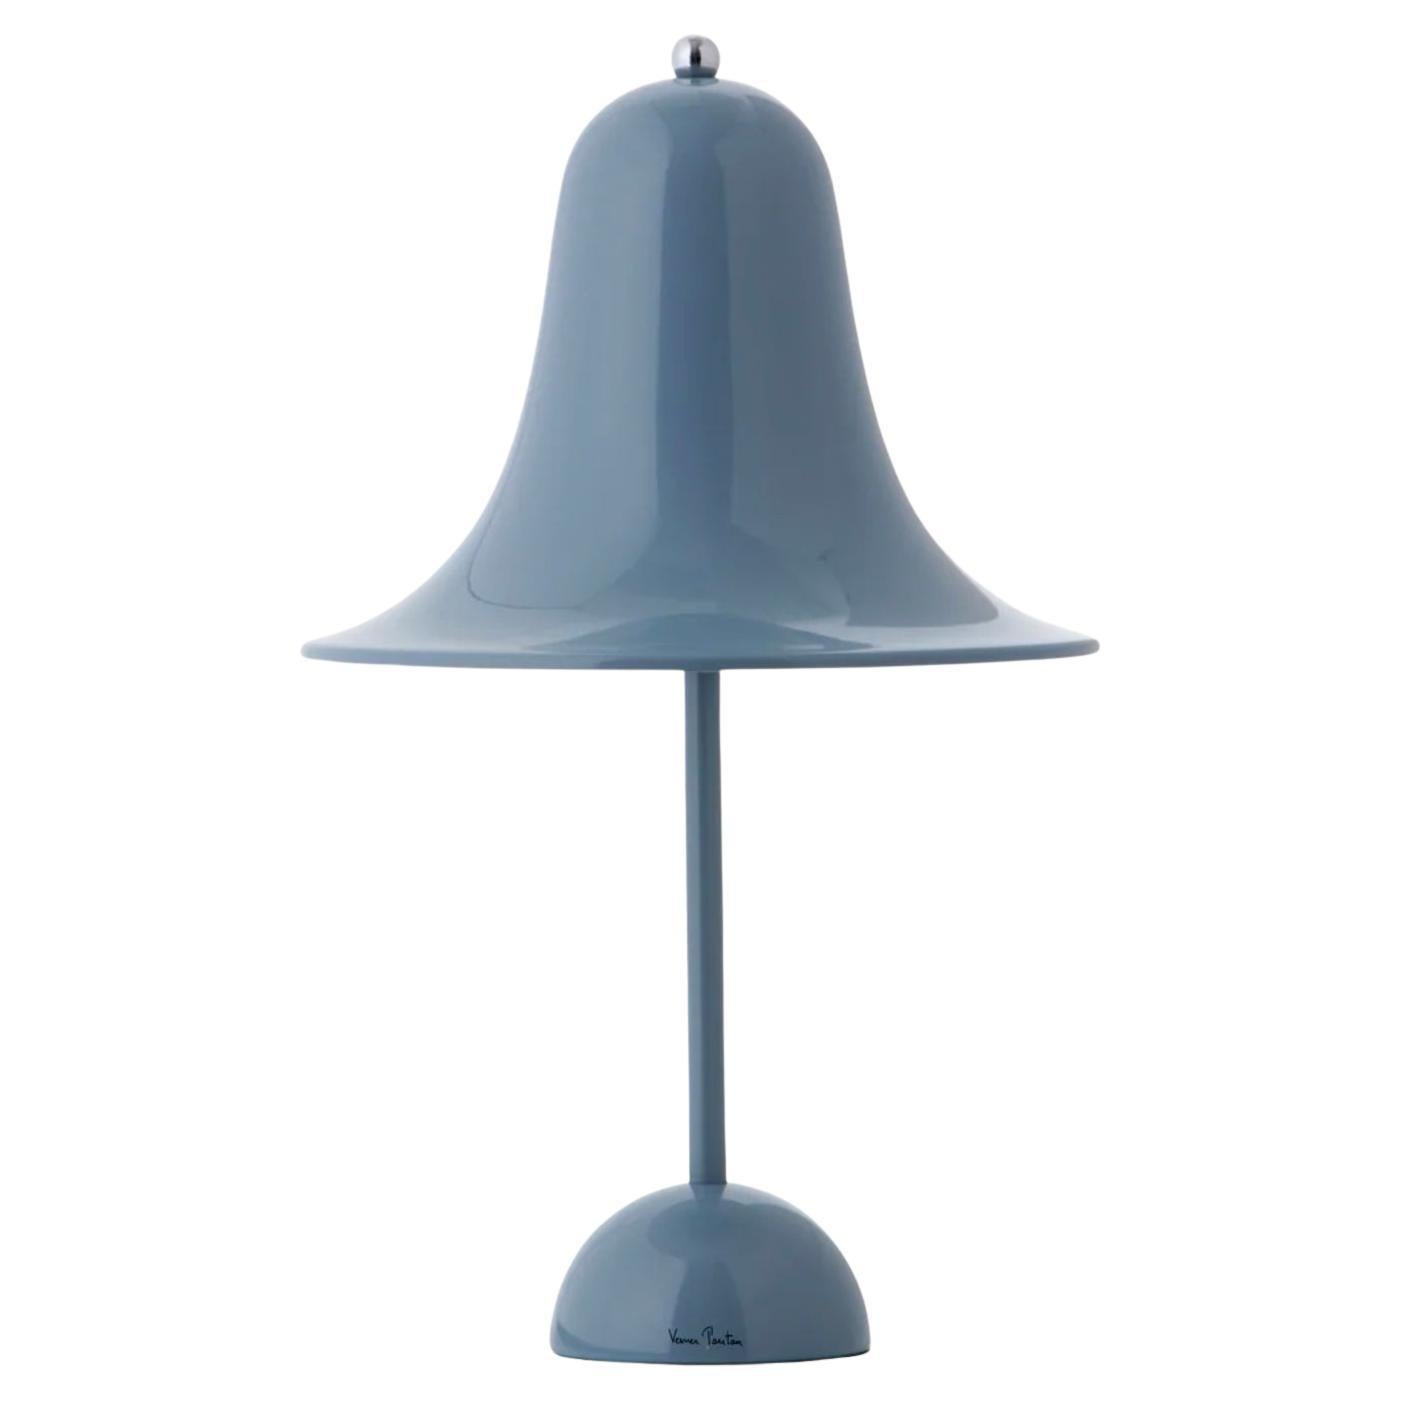 Verner Panton 'Pantop' Table Lamp in 'Dusty Blue' 1980 for Verpan For Sale